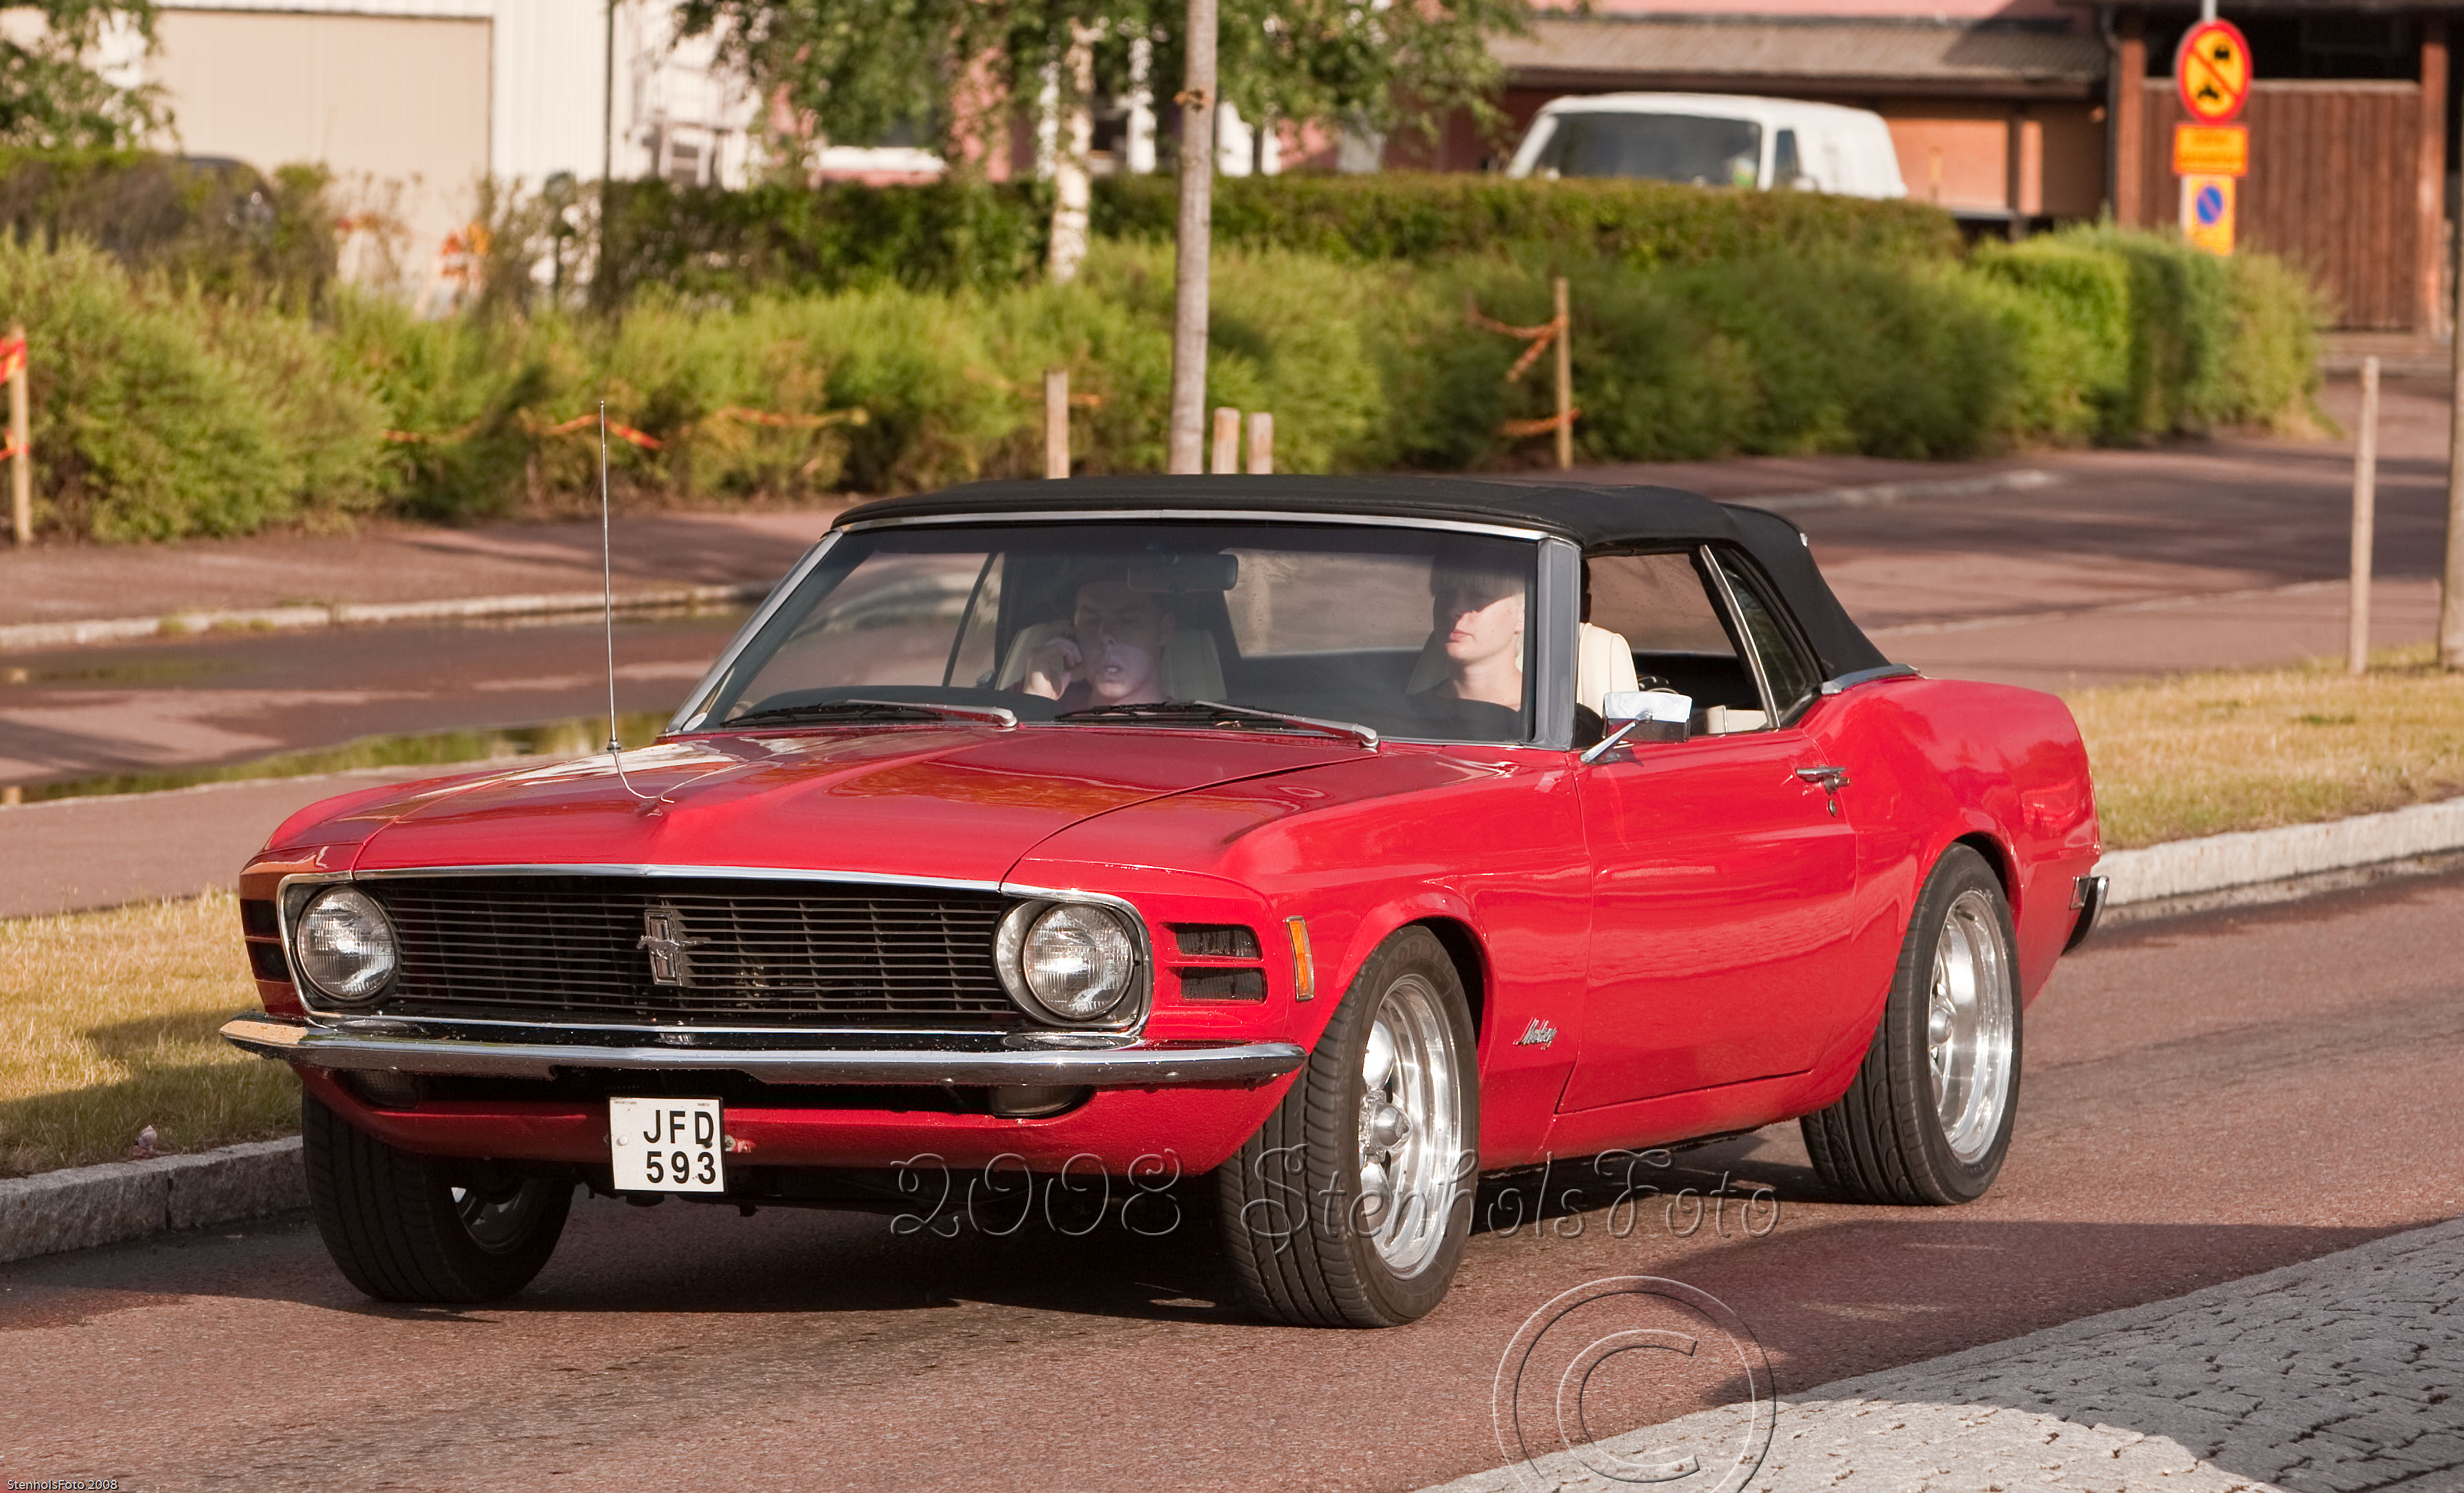 Ford Mustang -70 | Flickr - Photo Sharing!